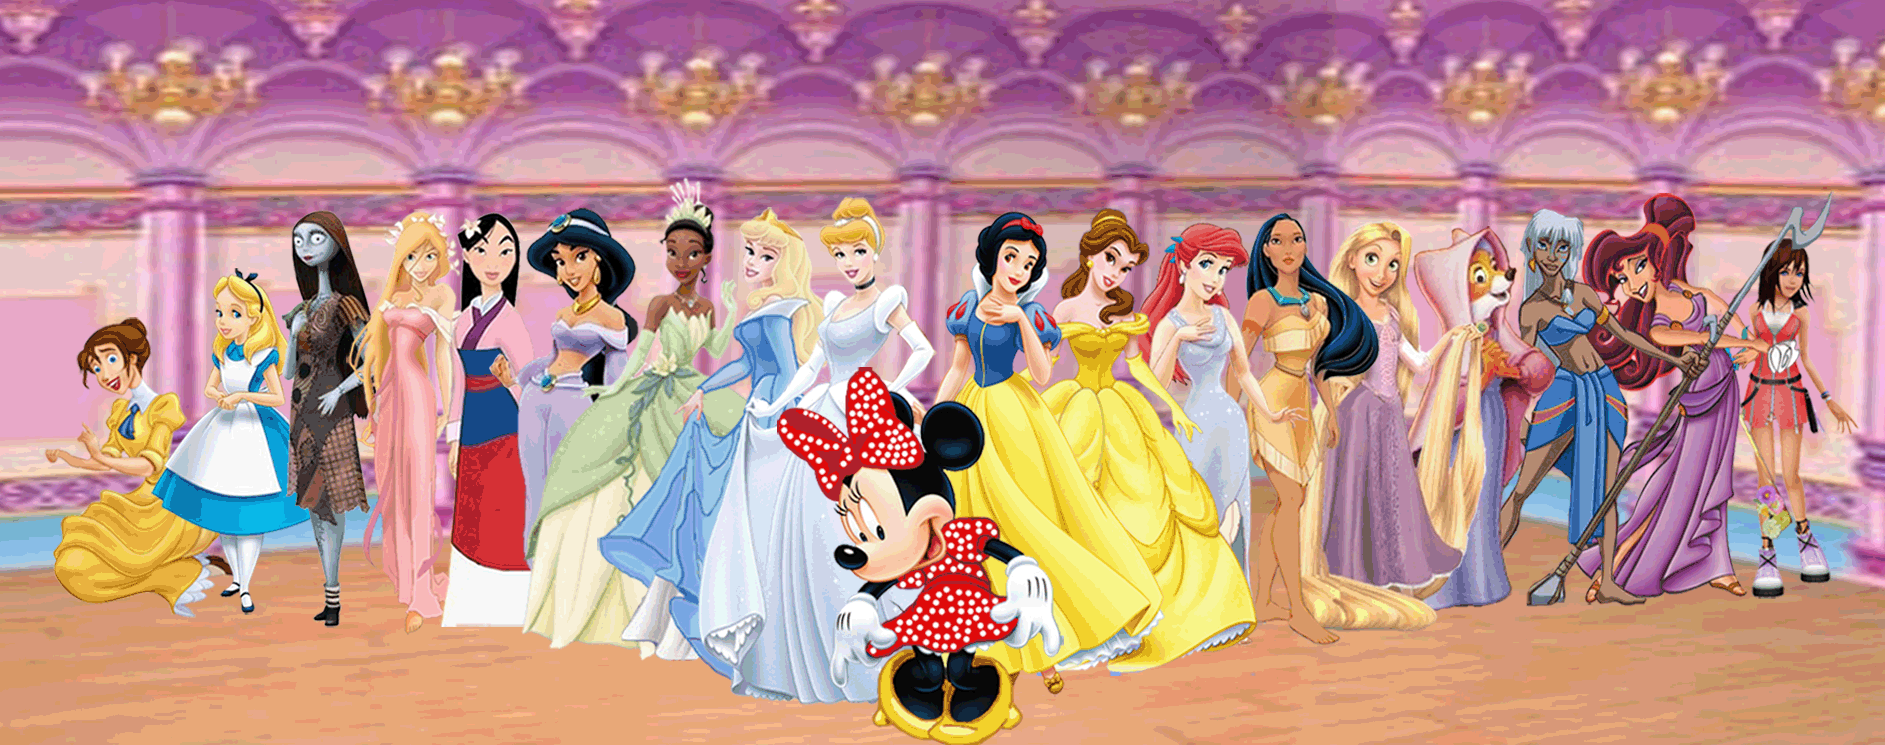 New Disney Princess Lineup Version Disney Princess Photo (15275194